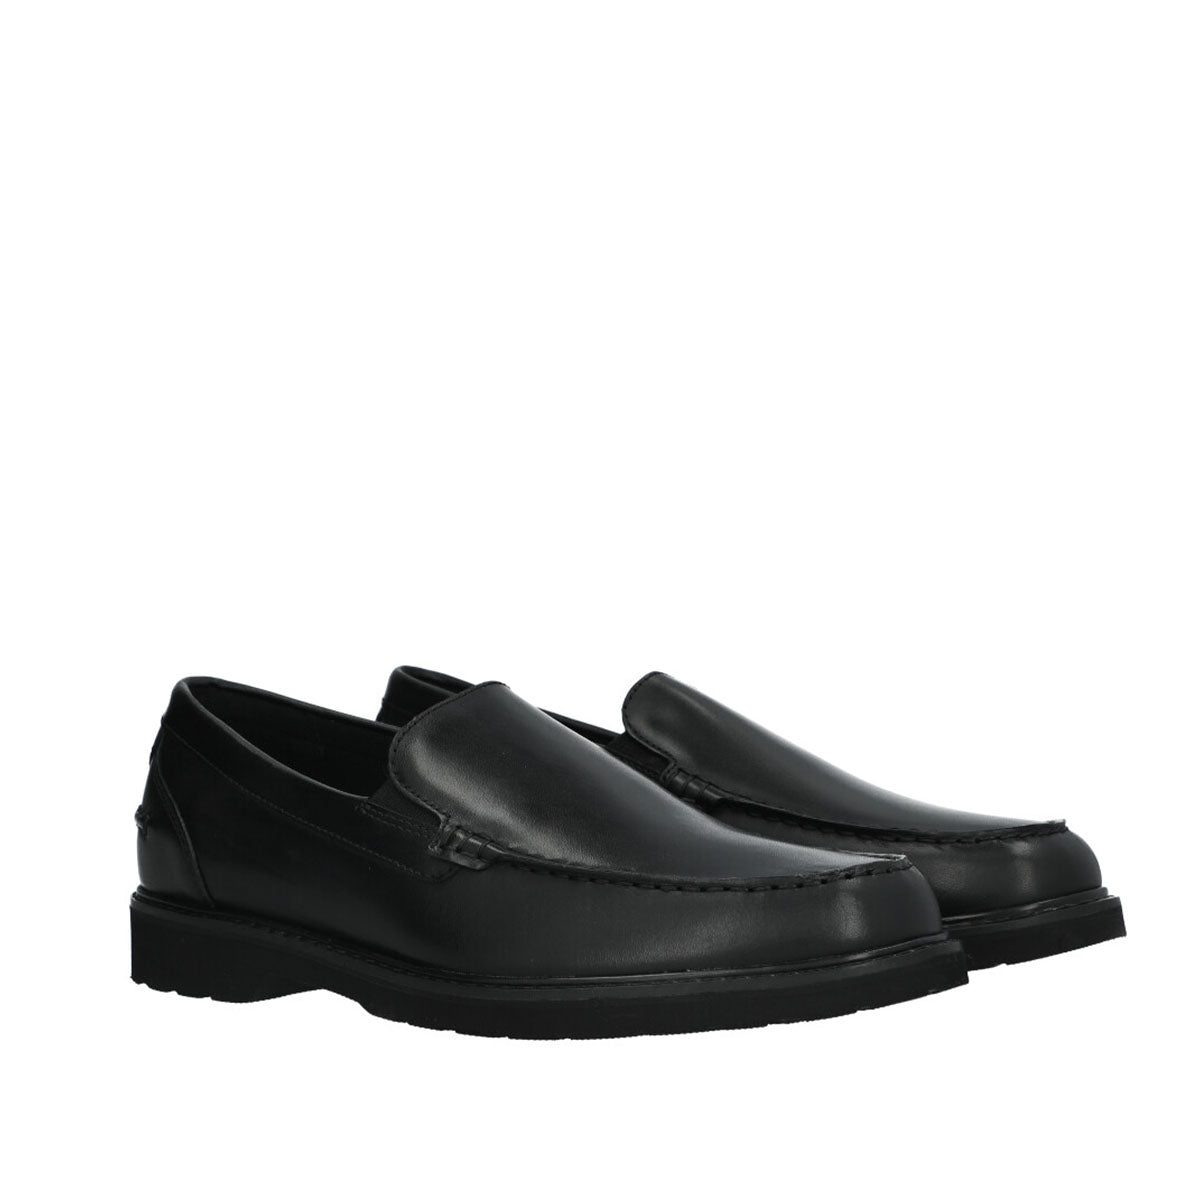 Rockport Bedford Venetian Black Smooth נעלי בדפורד שחור